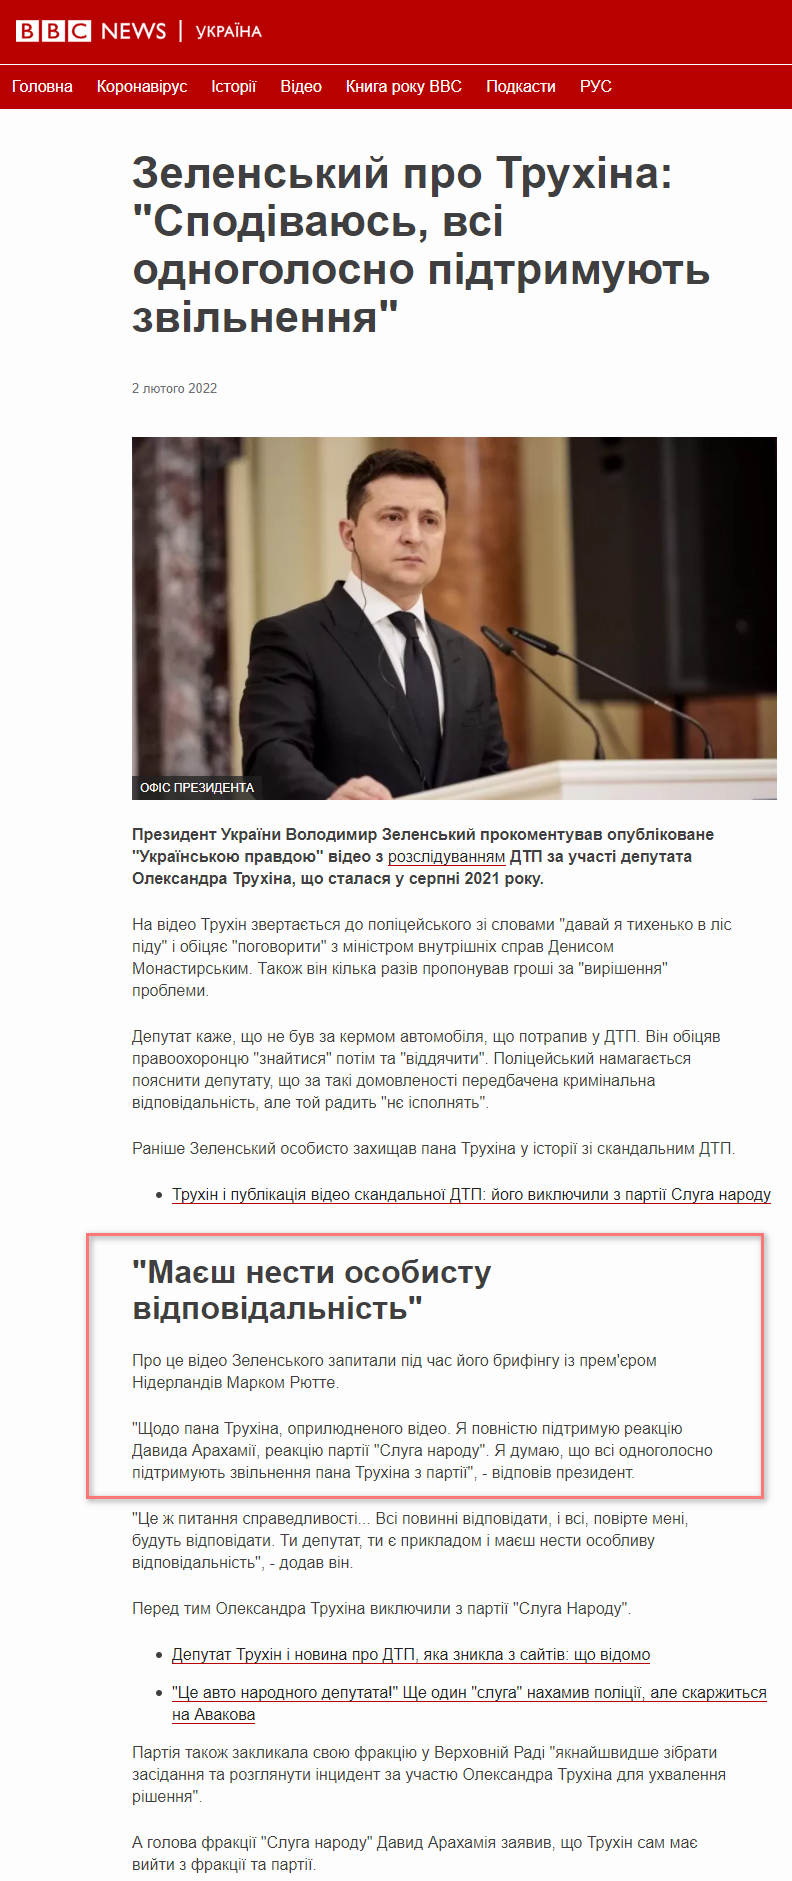 https://www.bbc.com/ukrainian/news-60230220